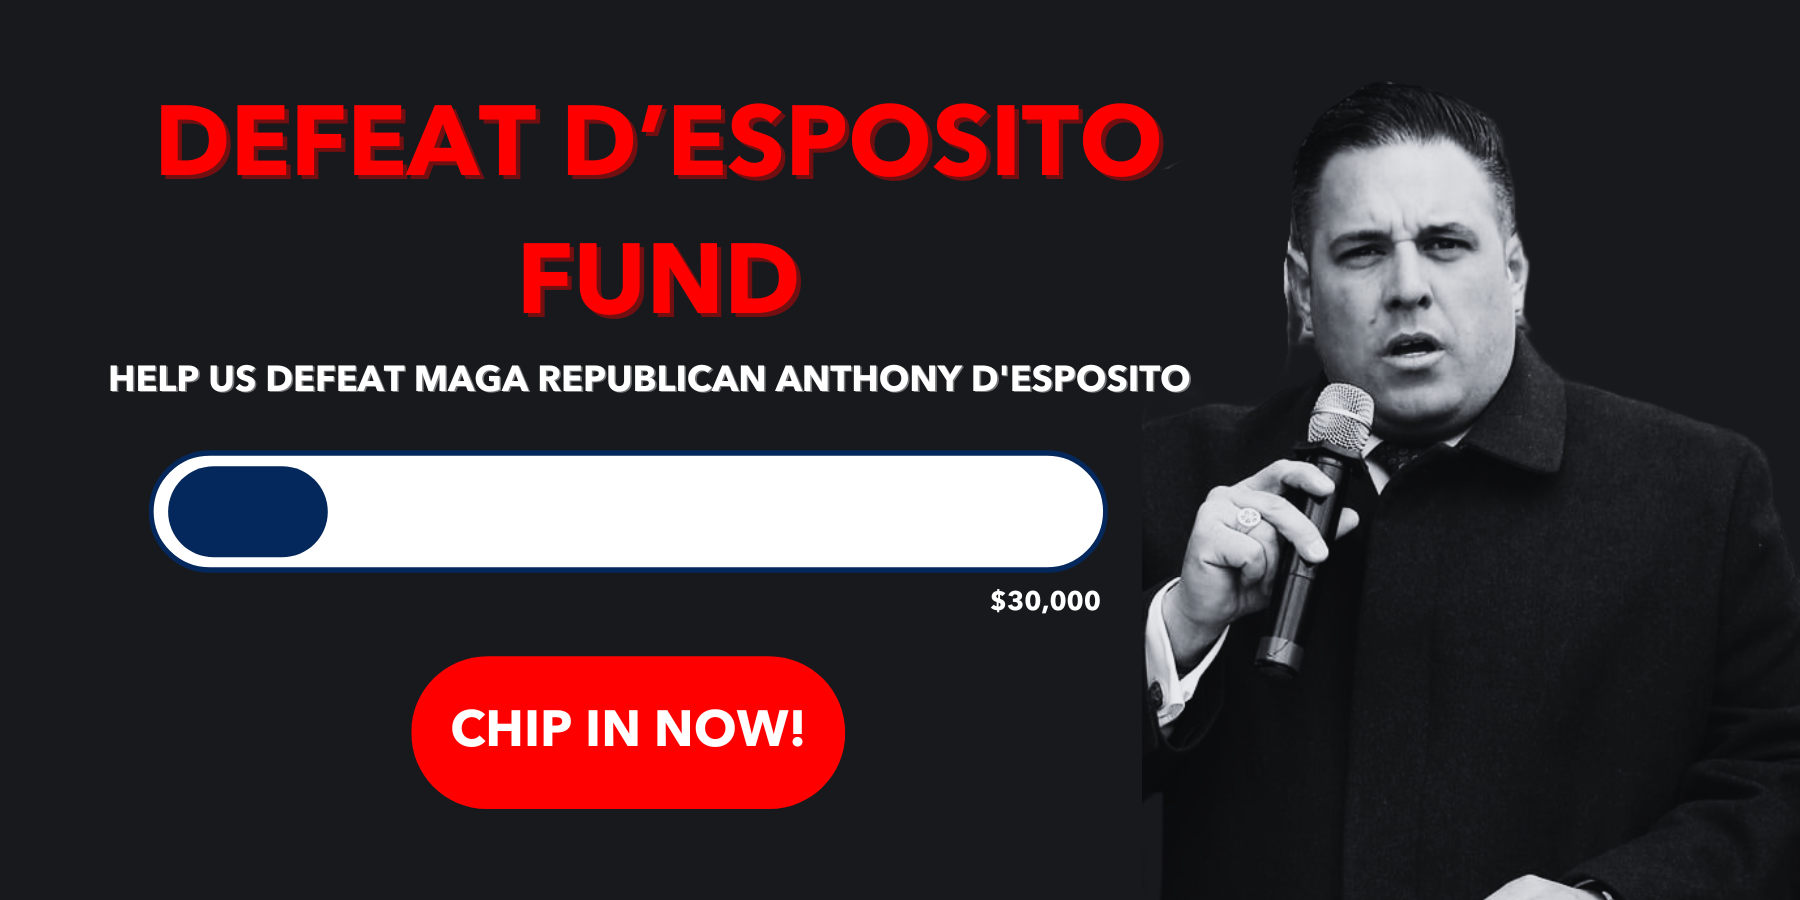 Defeat D’Esposito Fund: Help us defeat MAGA Republican Anthony D'Esposito